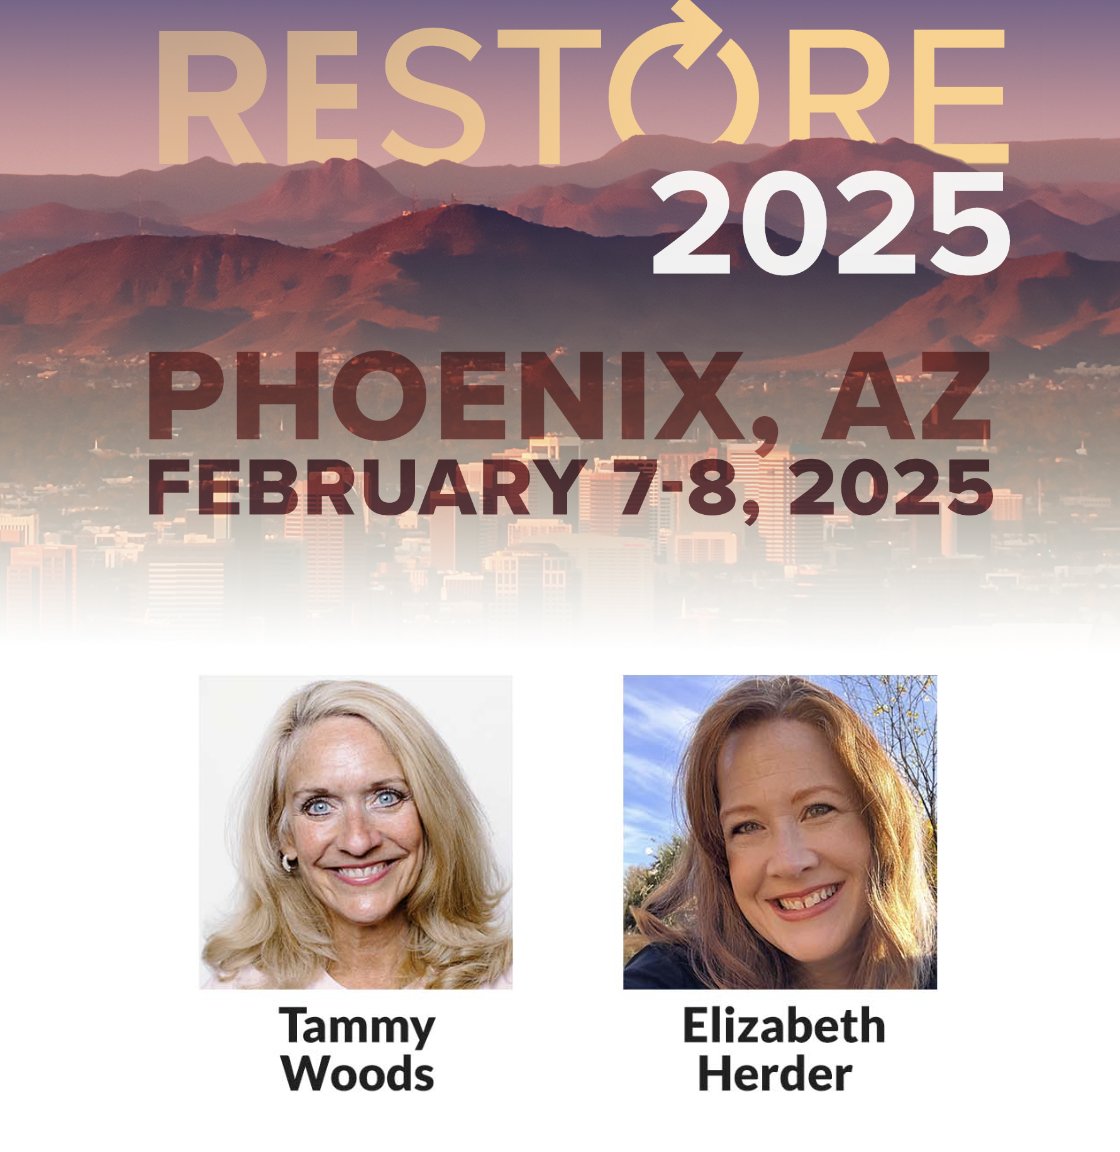 Tammy and Elizabeth team up to reveal Bickle's abuse at Restore 2025. So proud of these women! #TammyRiddering #ElizabethHerder eventbrite.com/e/restore-2025…